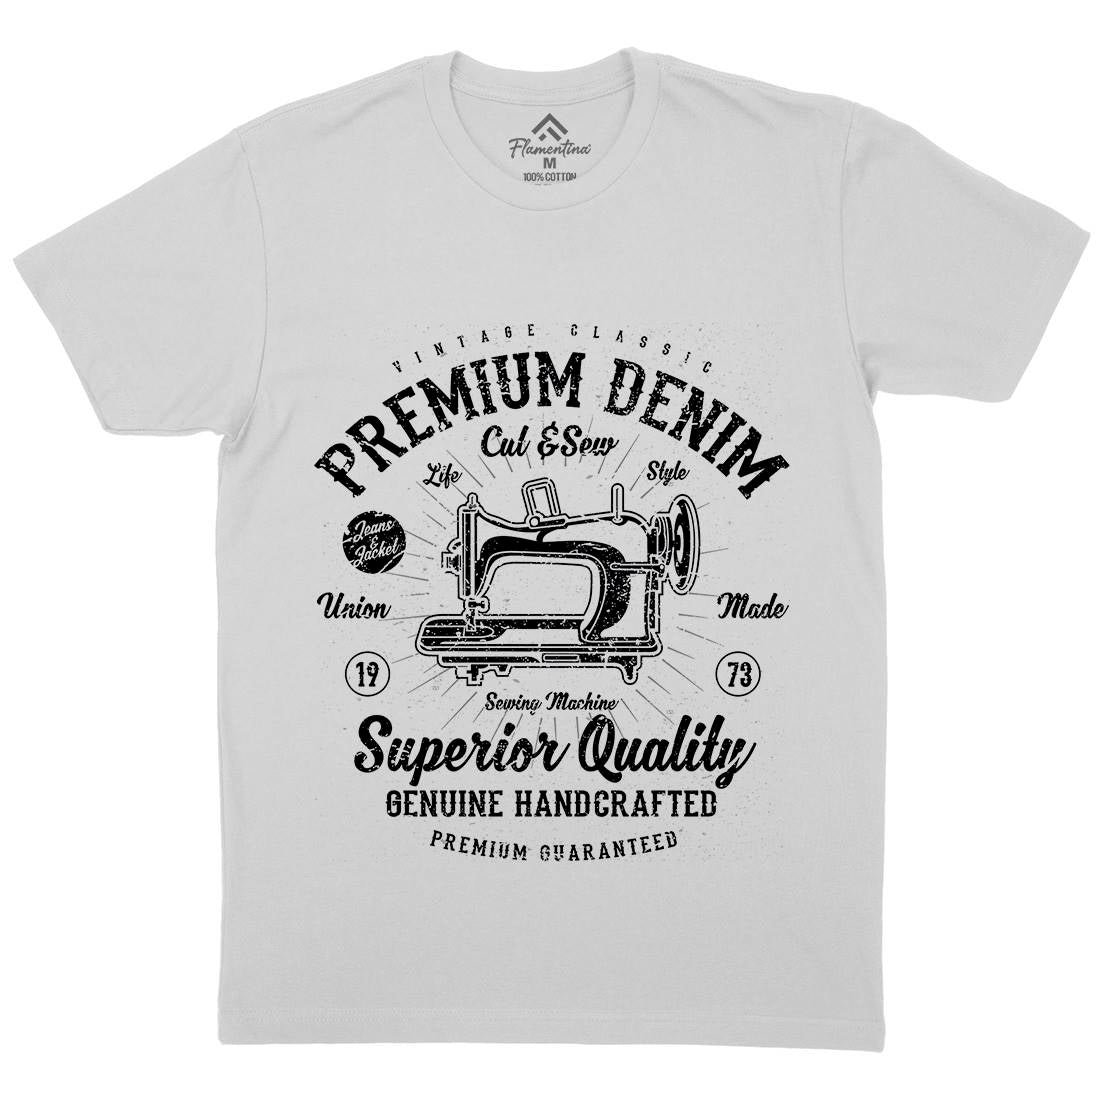 Premium Sewing Machine Mens Crew Neck T-Shirt Work A111